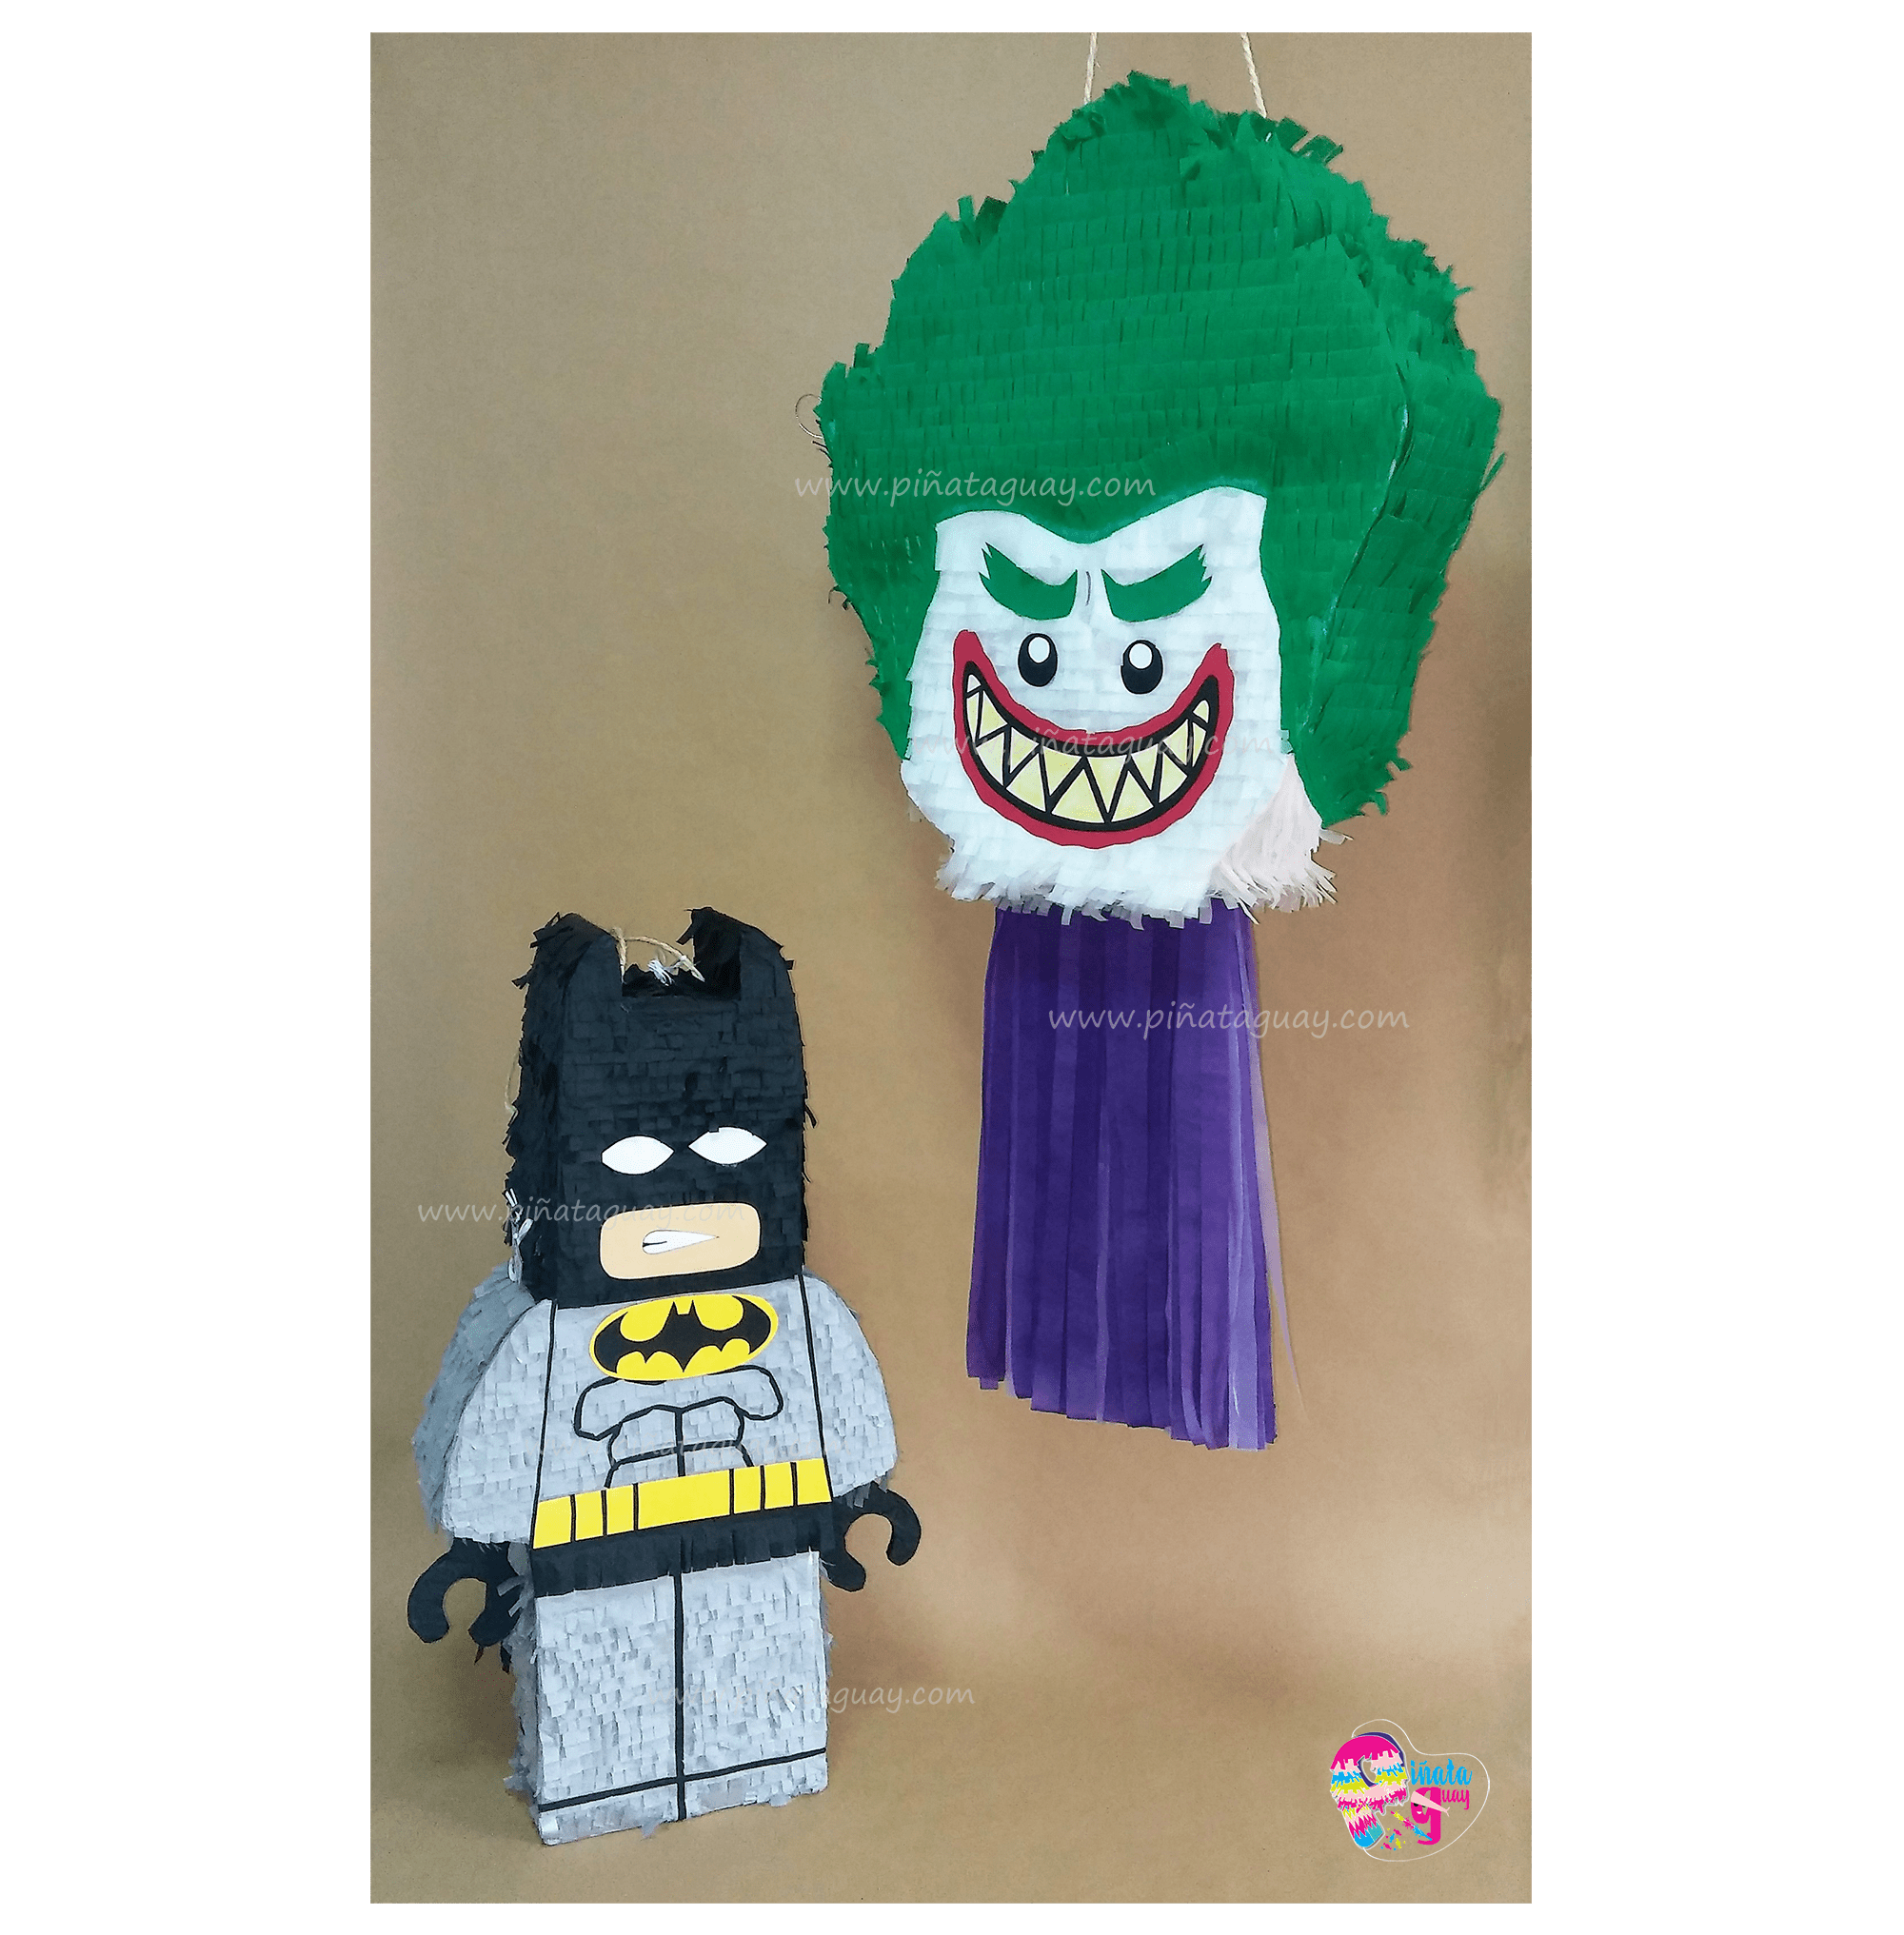 Piñata Joker - Lego Batman - Lego Batman - Piñata Guay